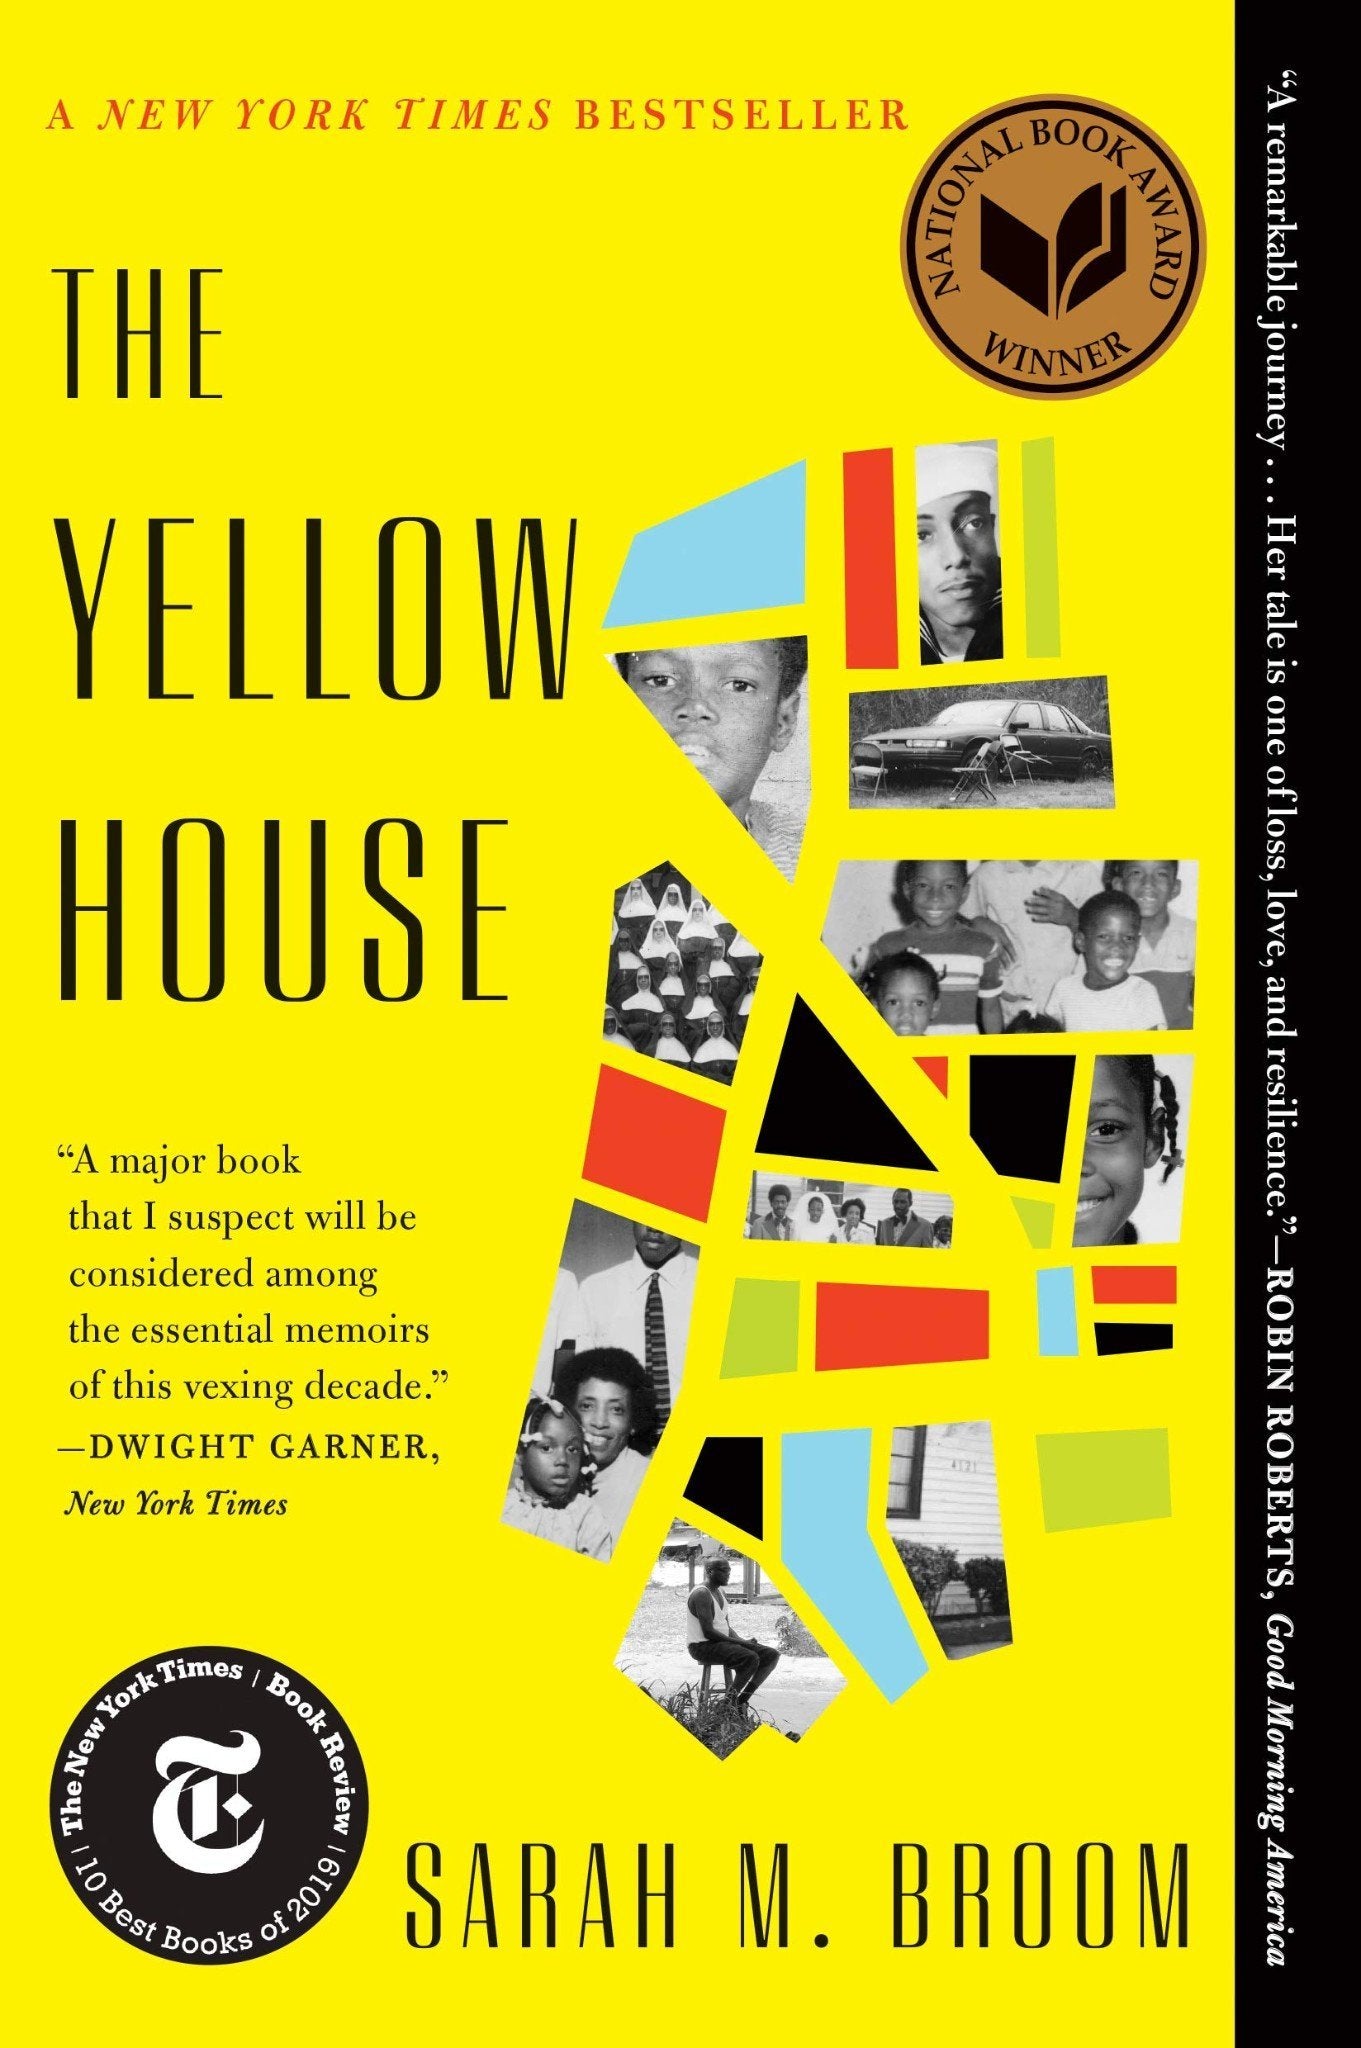 The Yellow House: A Memoir by Sarah M. Broom (Paperback) National Book Award - LV'S Global Media